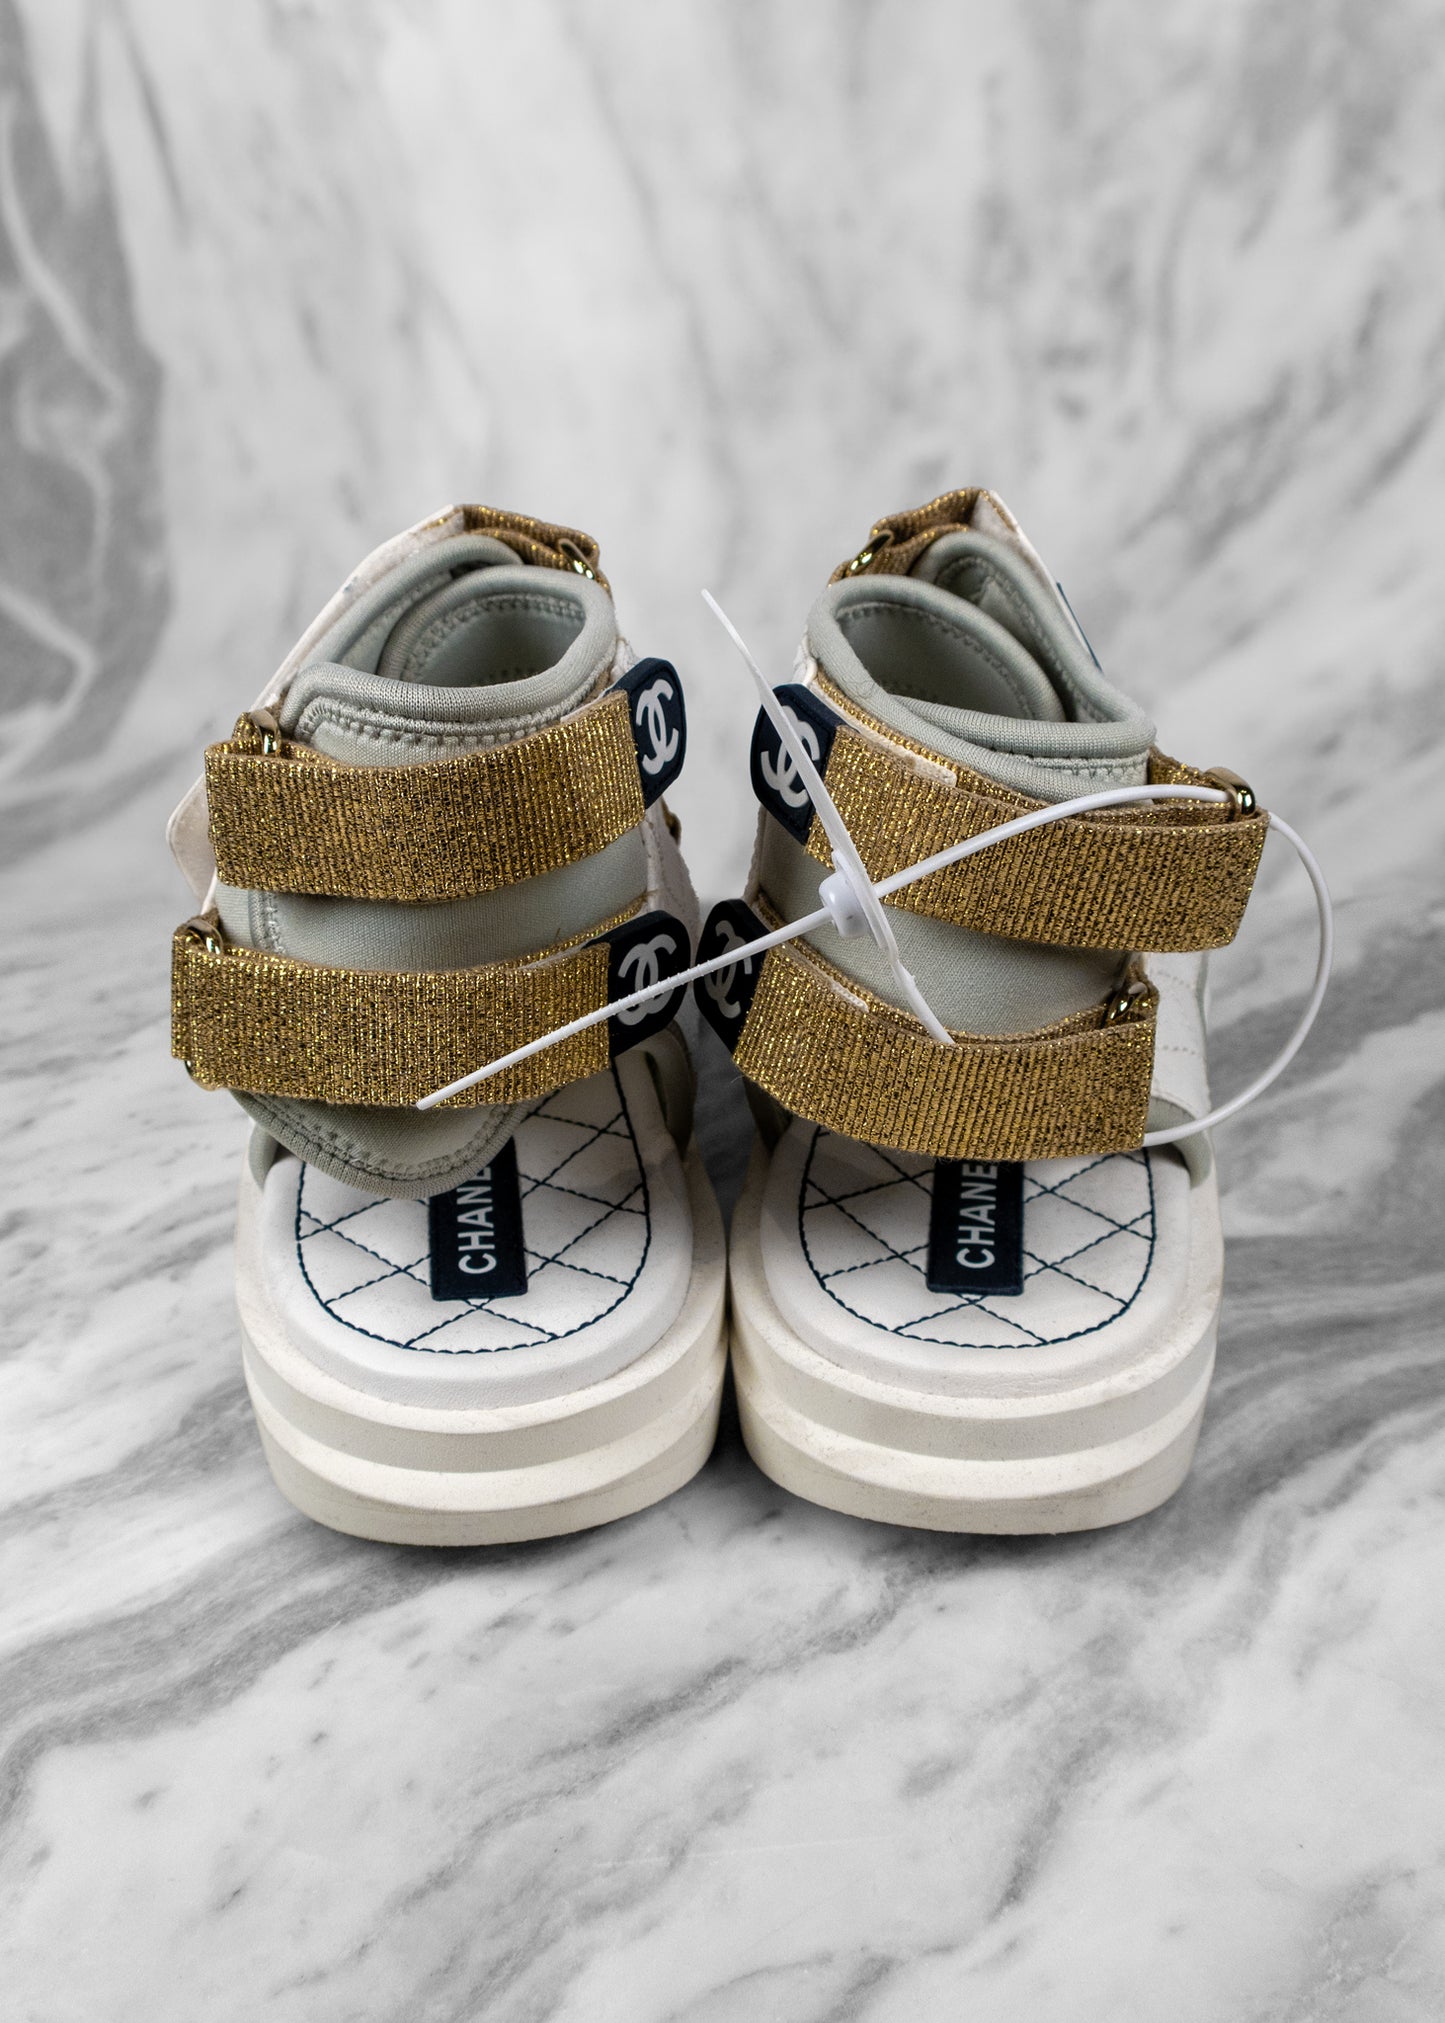 Chanel Goatskin Fabric Gladiator Sandals